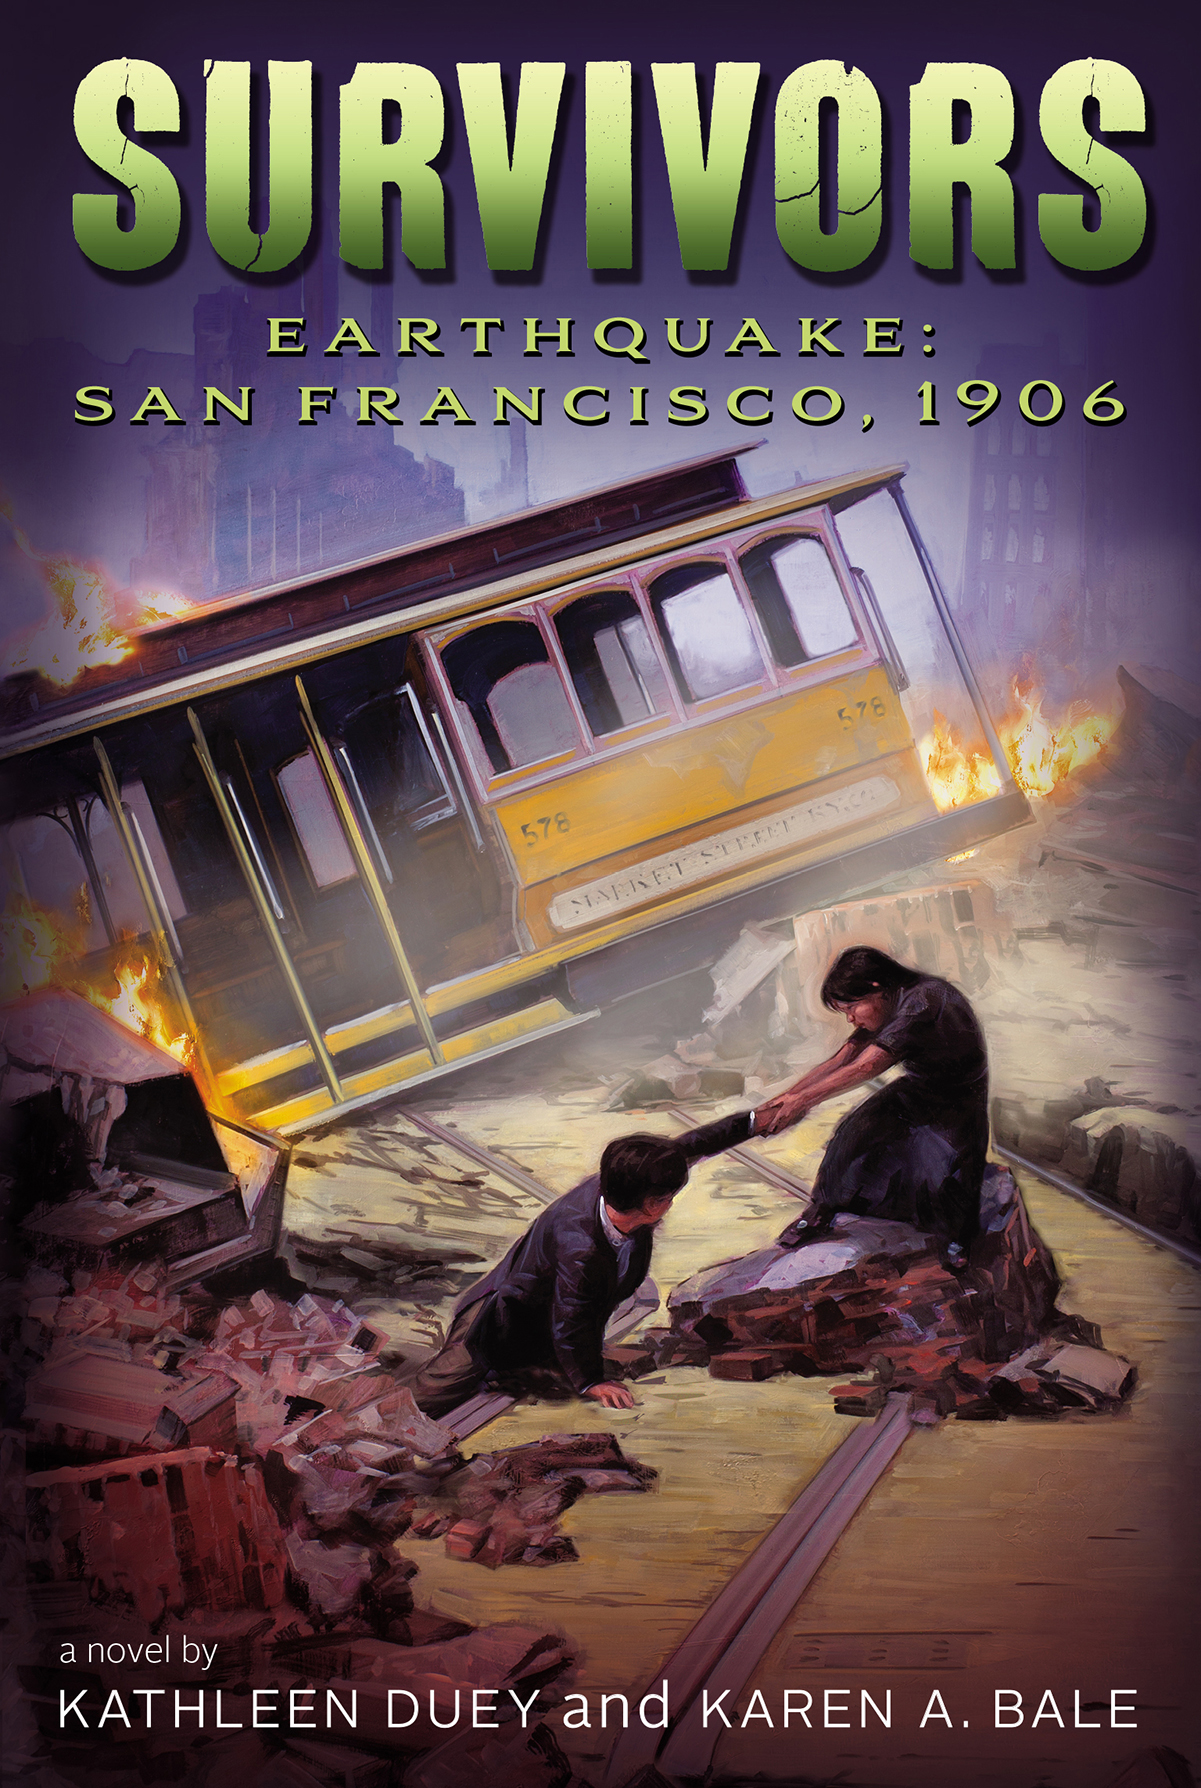 Earthquake by Kathleen Duey